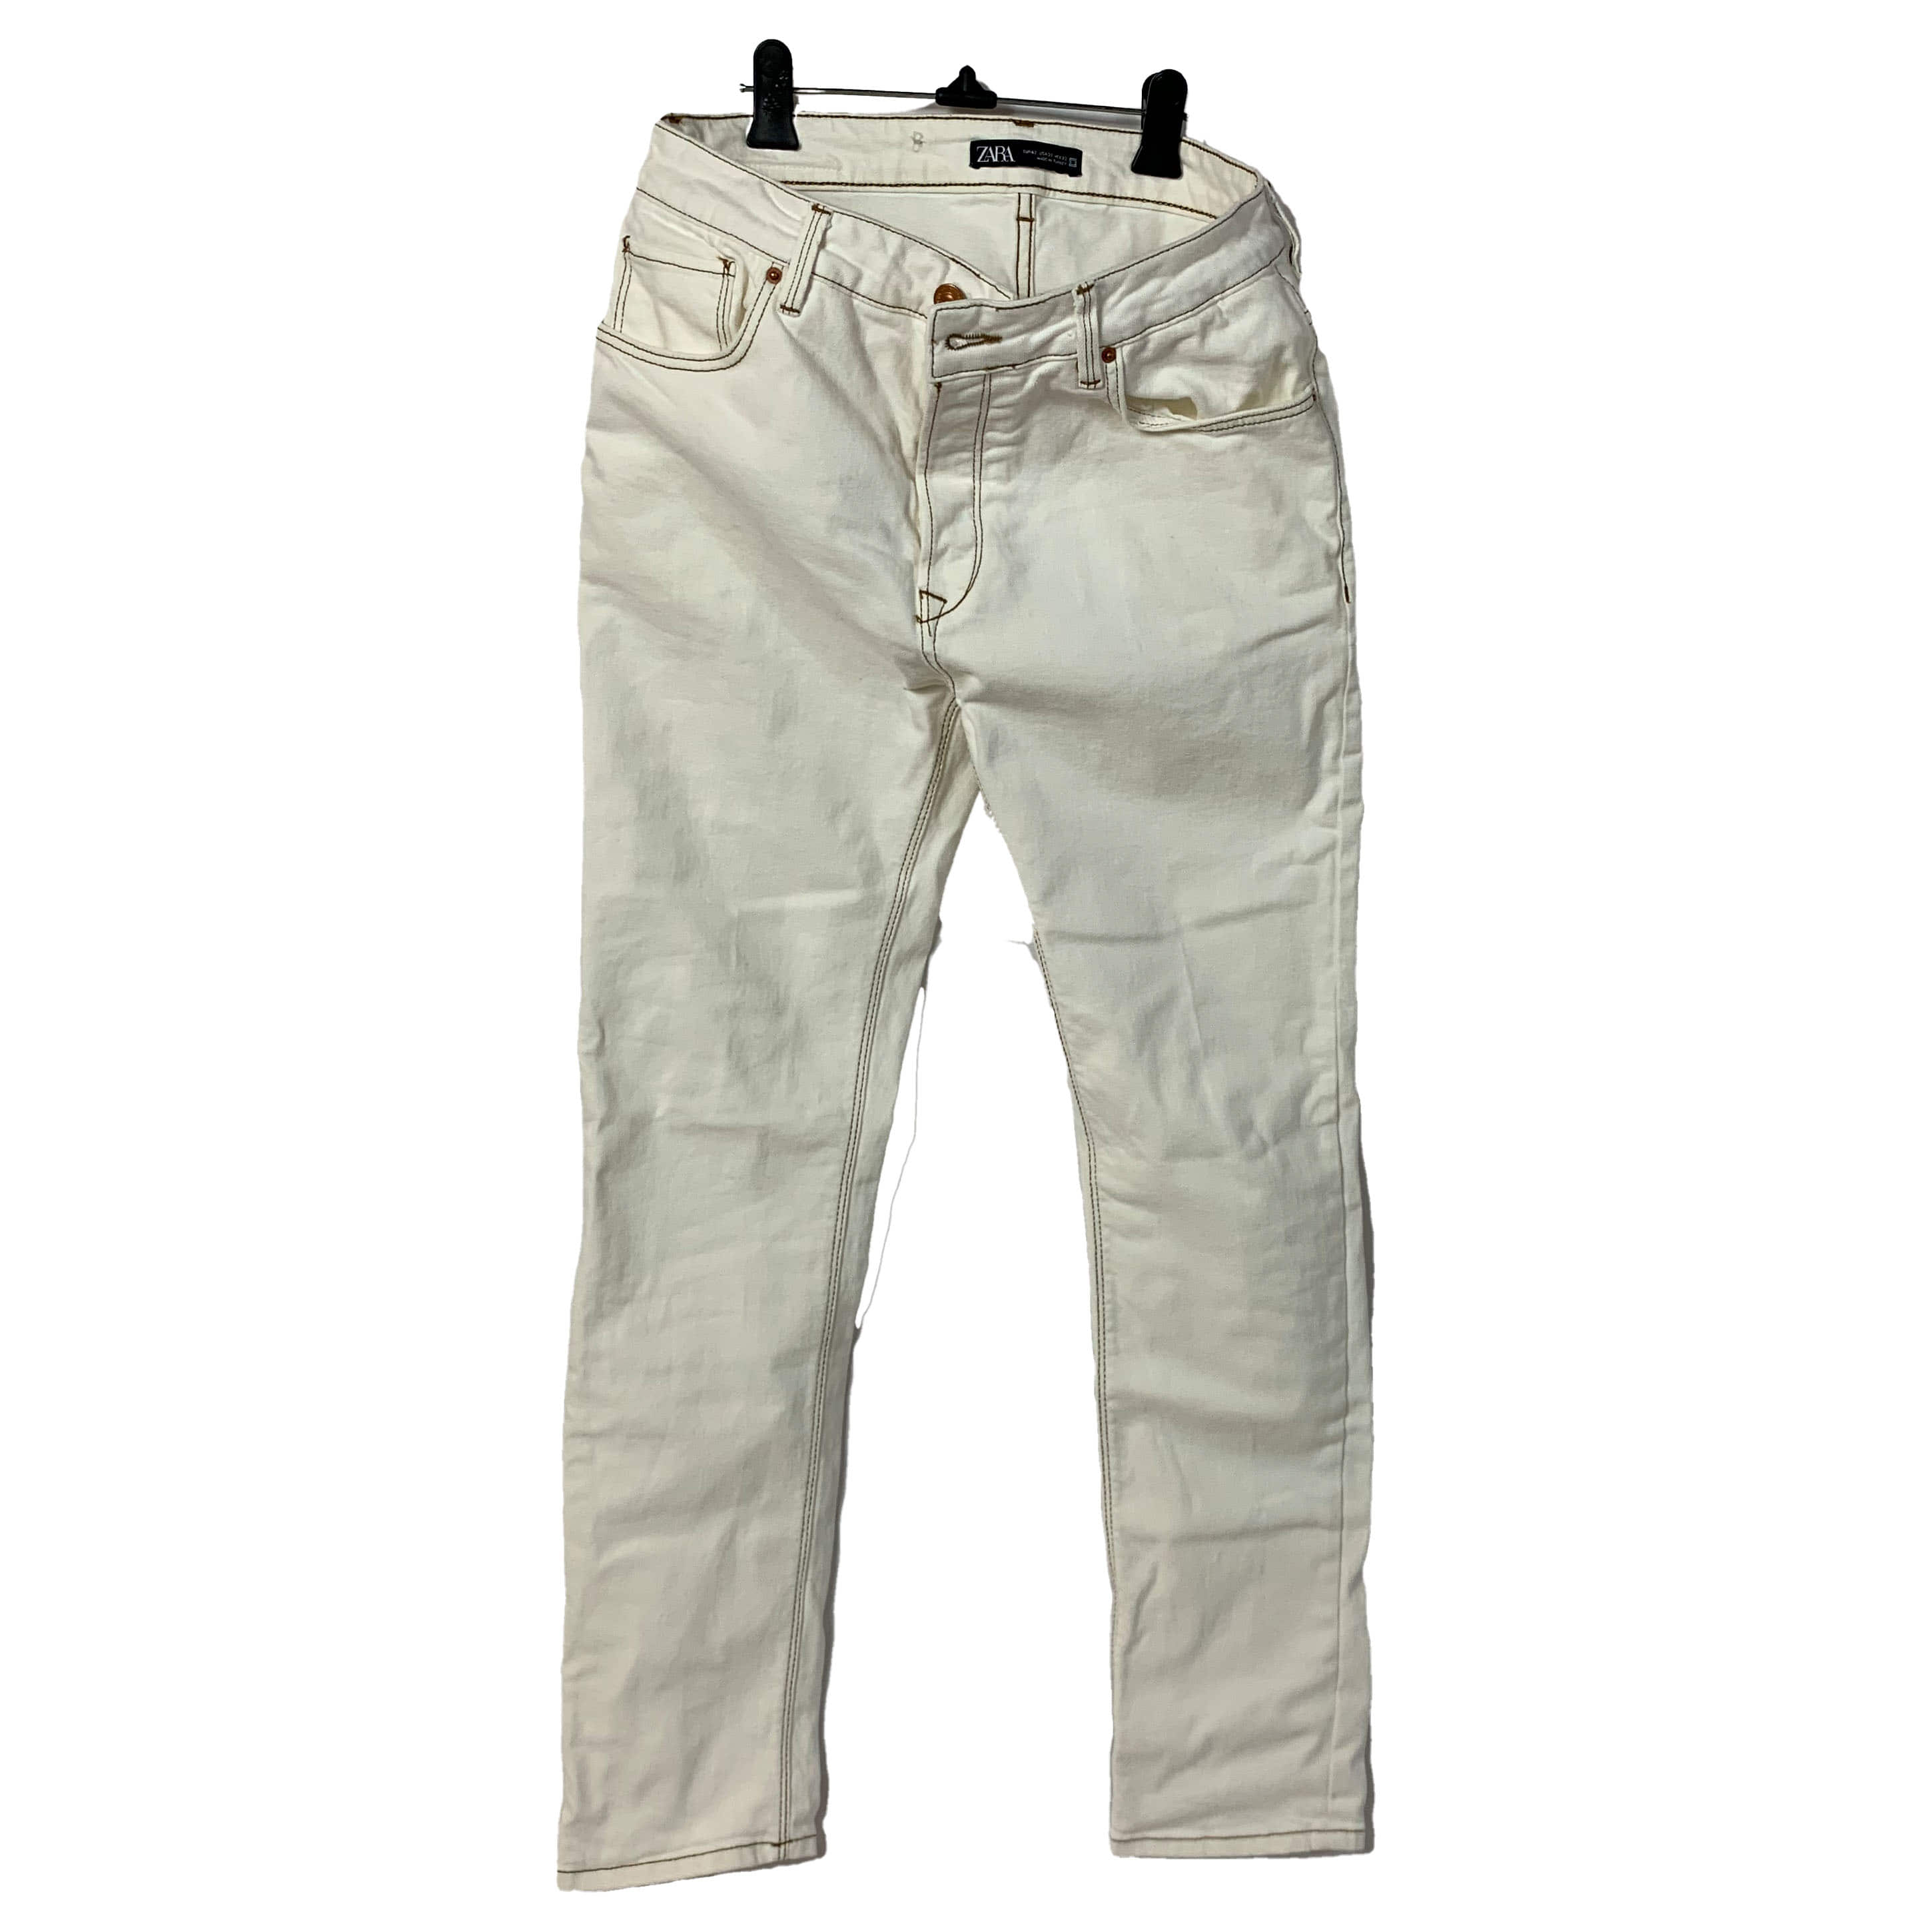 [ZARA] White Skinny Jeans - Size 32